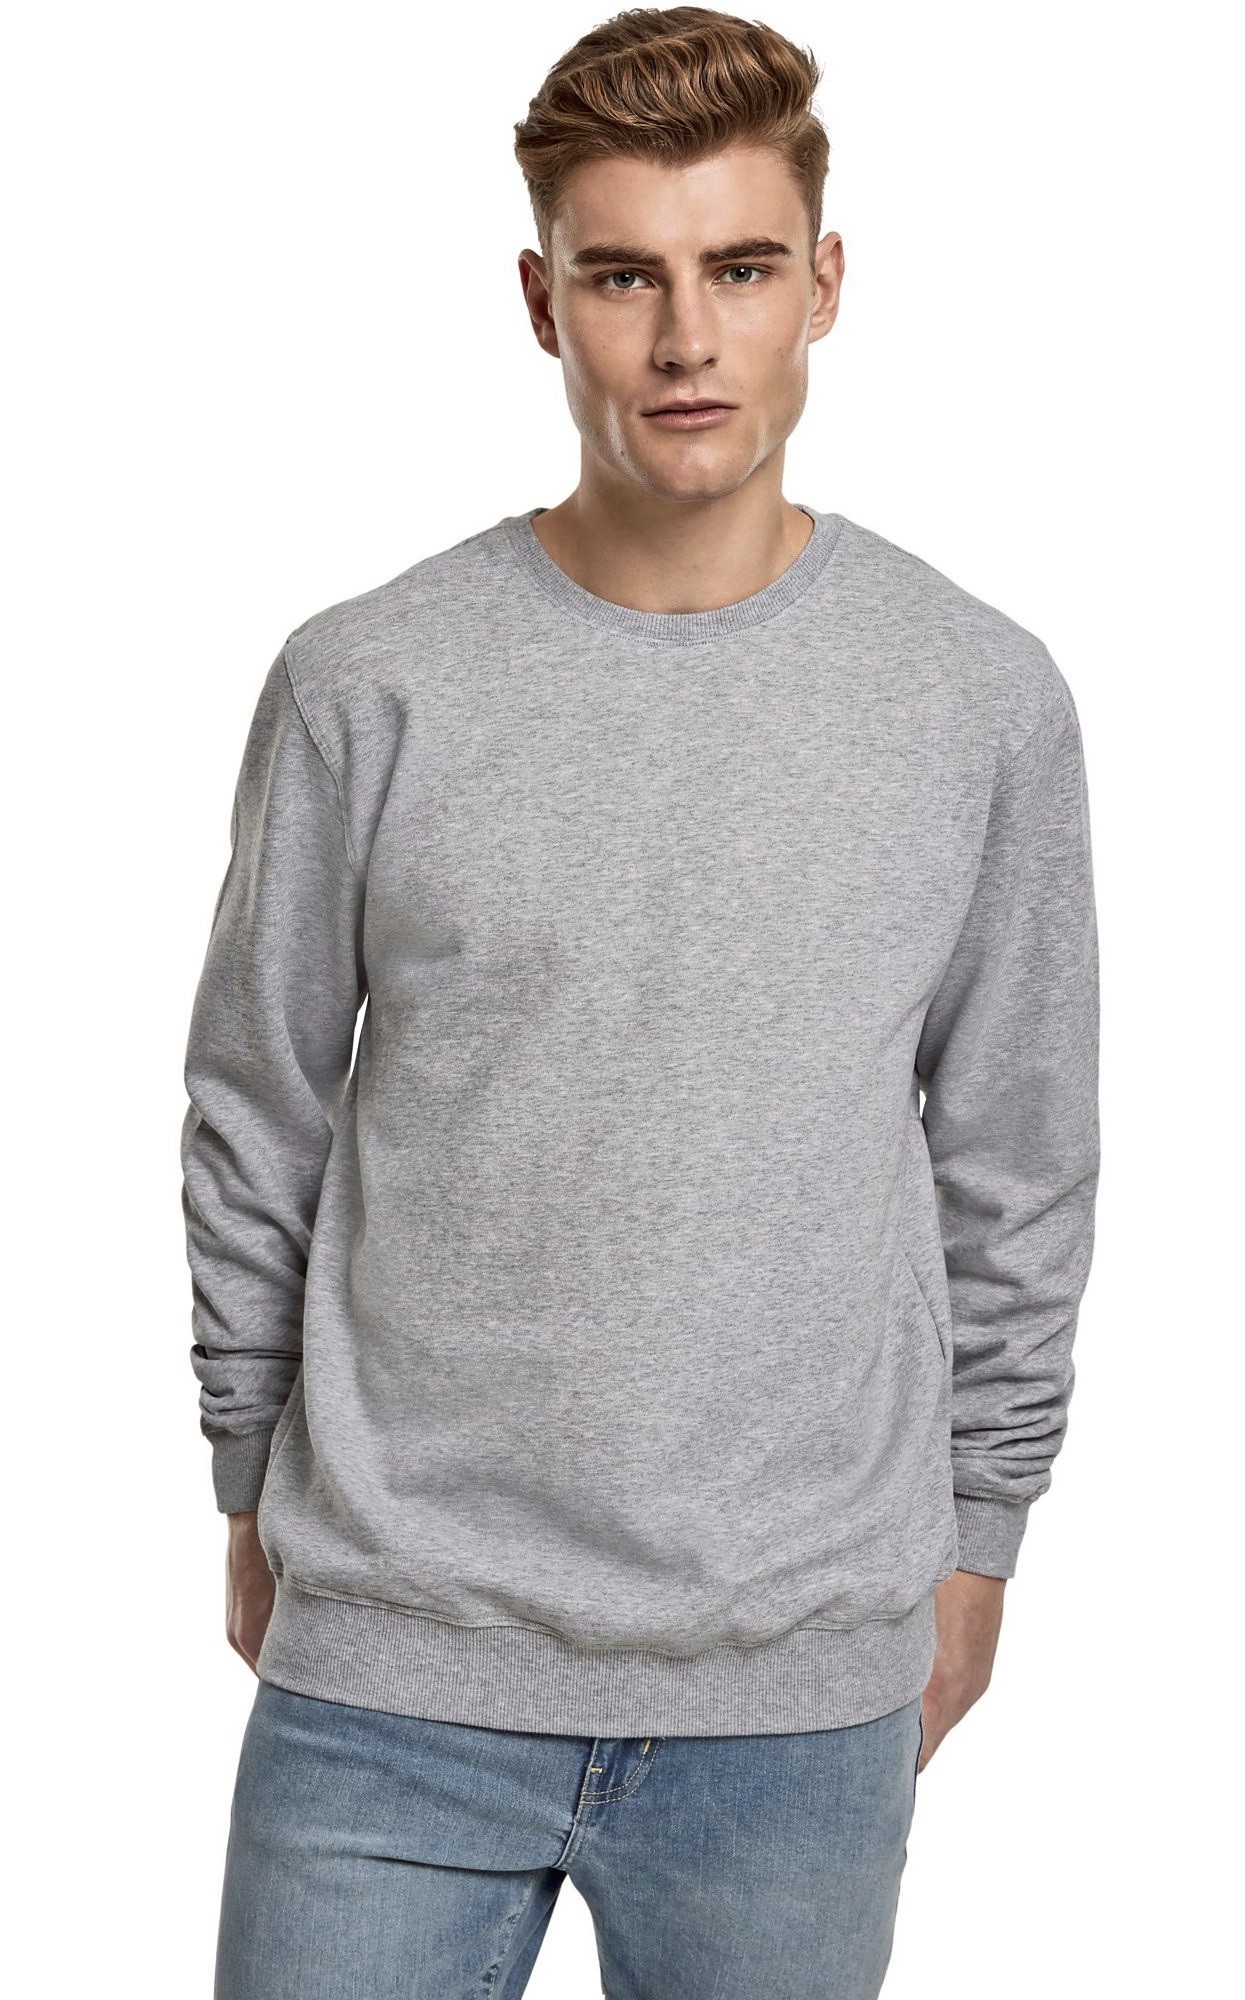 Sweatshirts - Build Your Brand - Premium Crewneck Sweatshirt - BY119